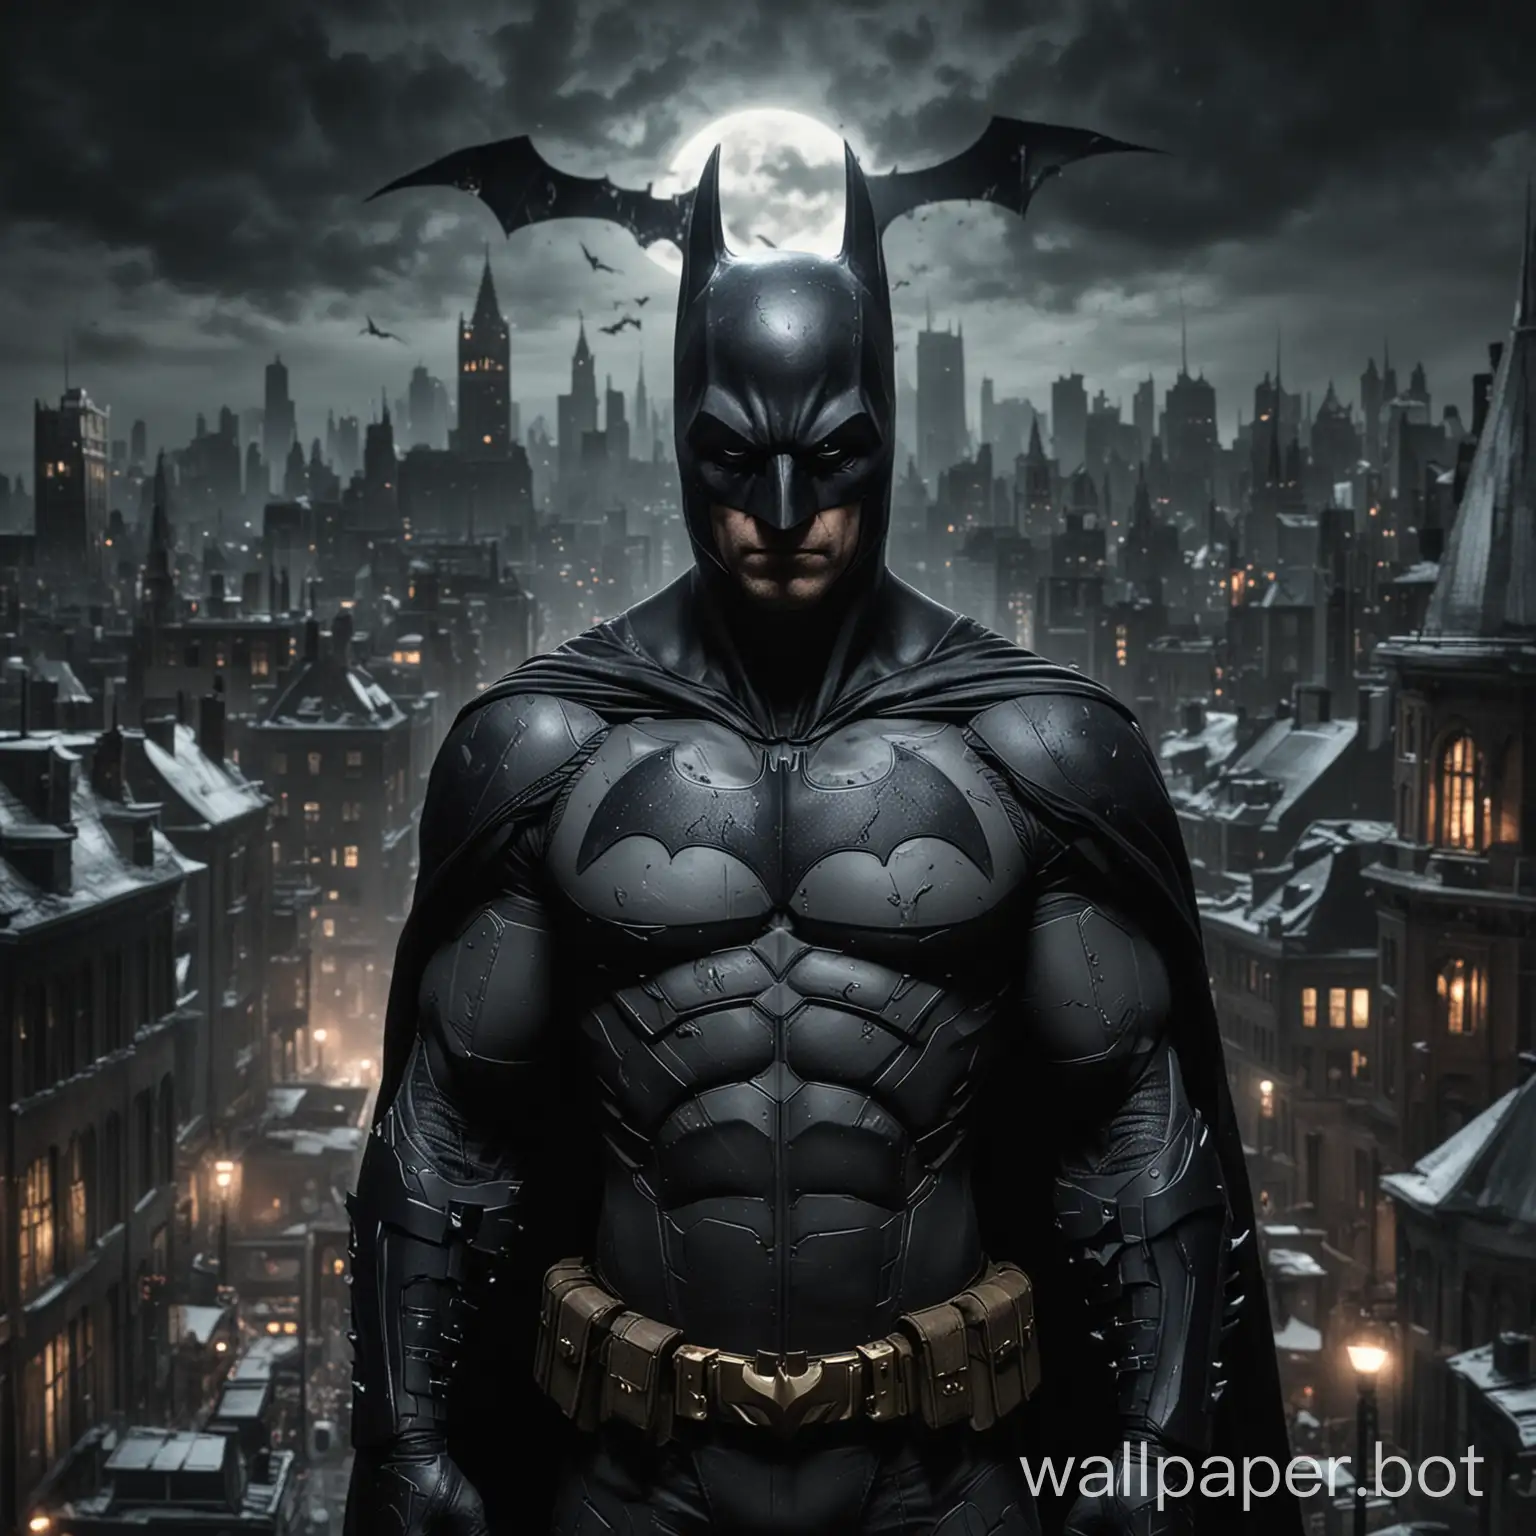 Batman-Patrolling-Gotham-City-Streets-at-Night